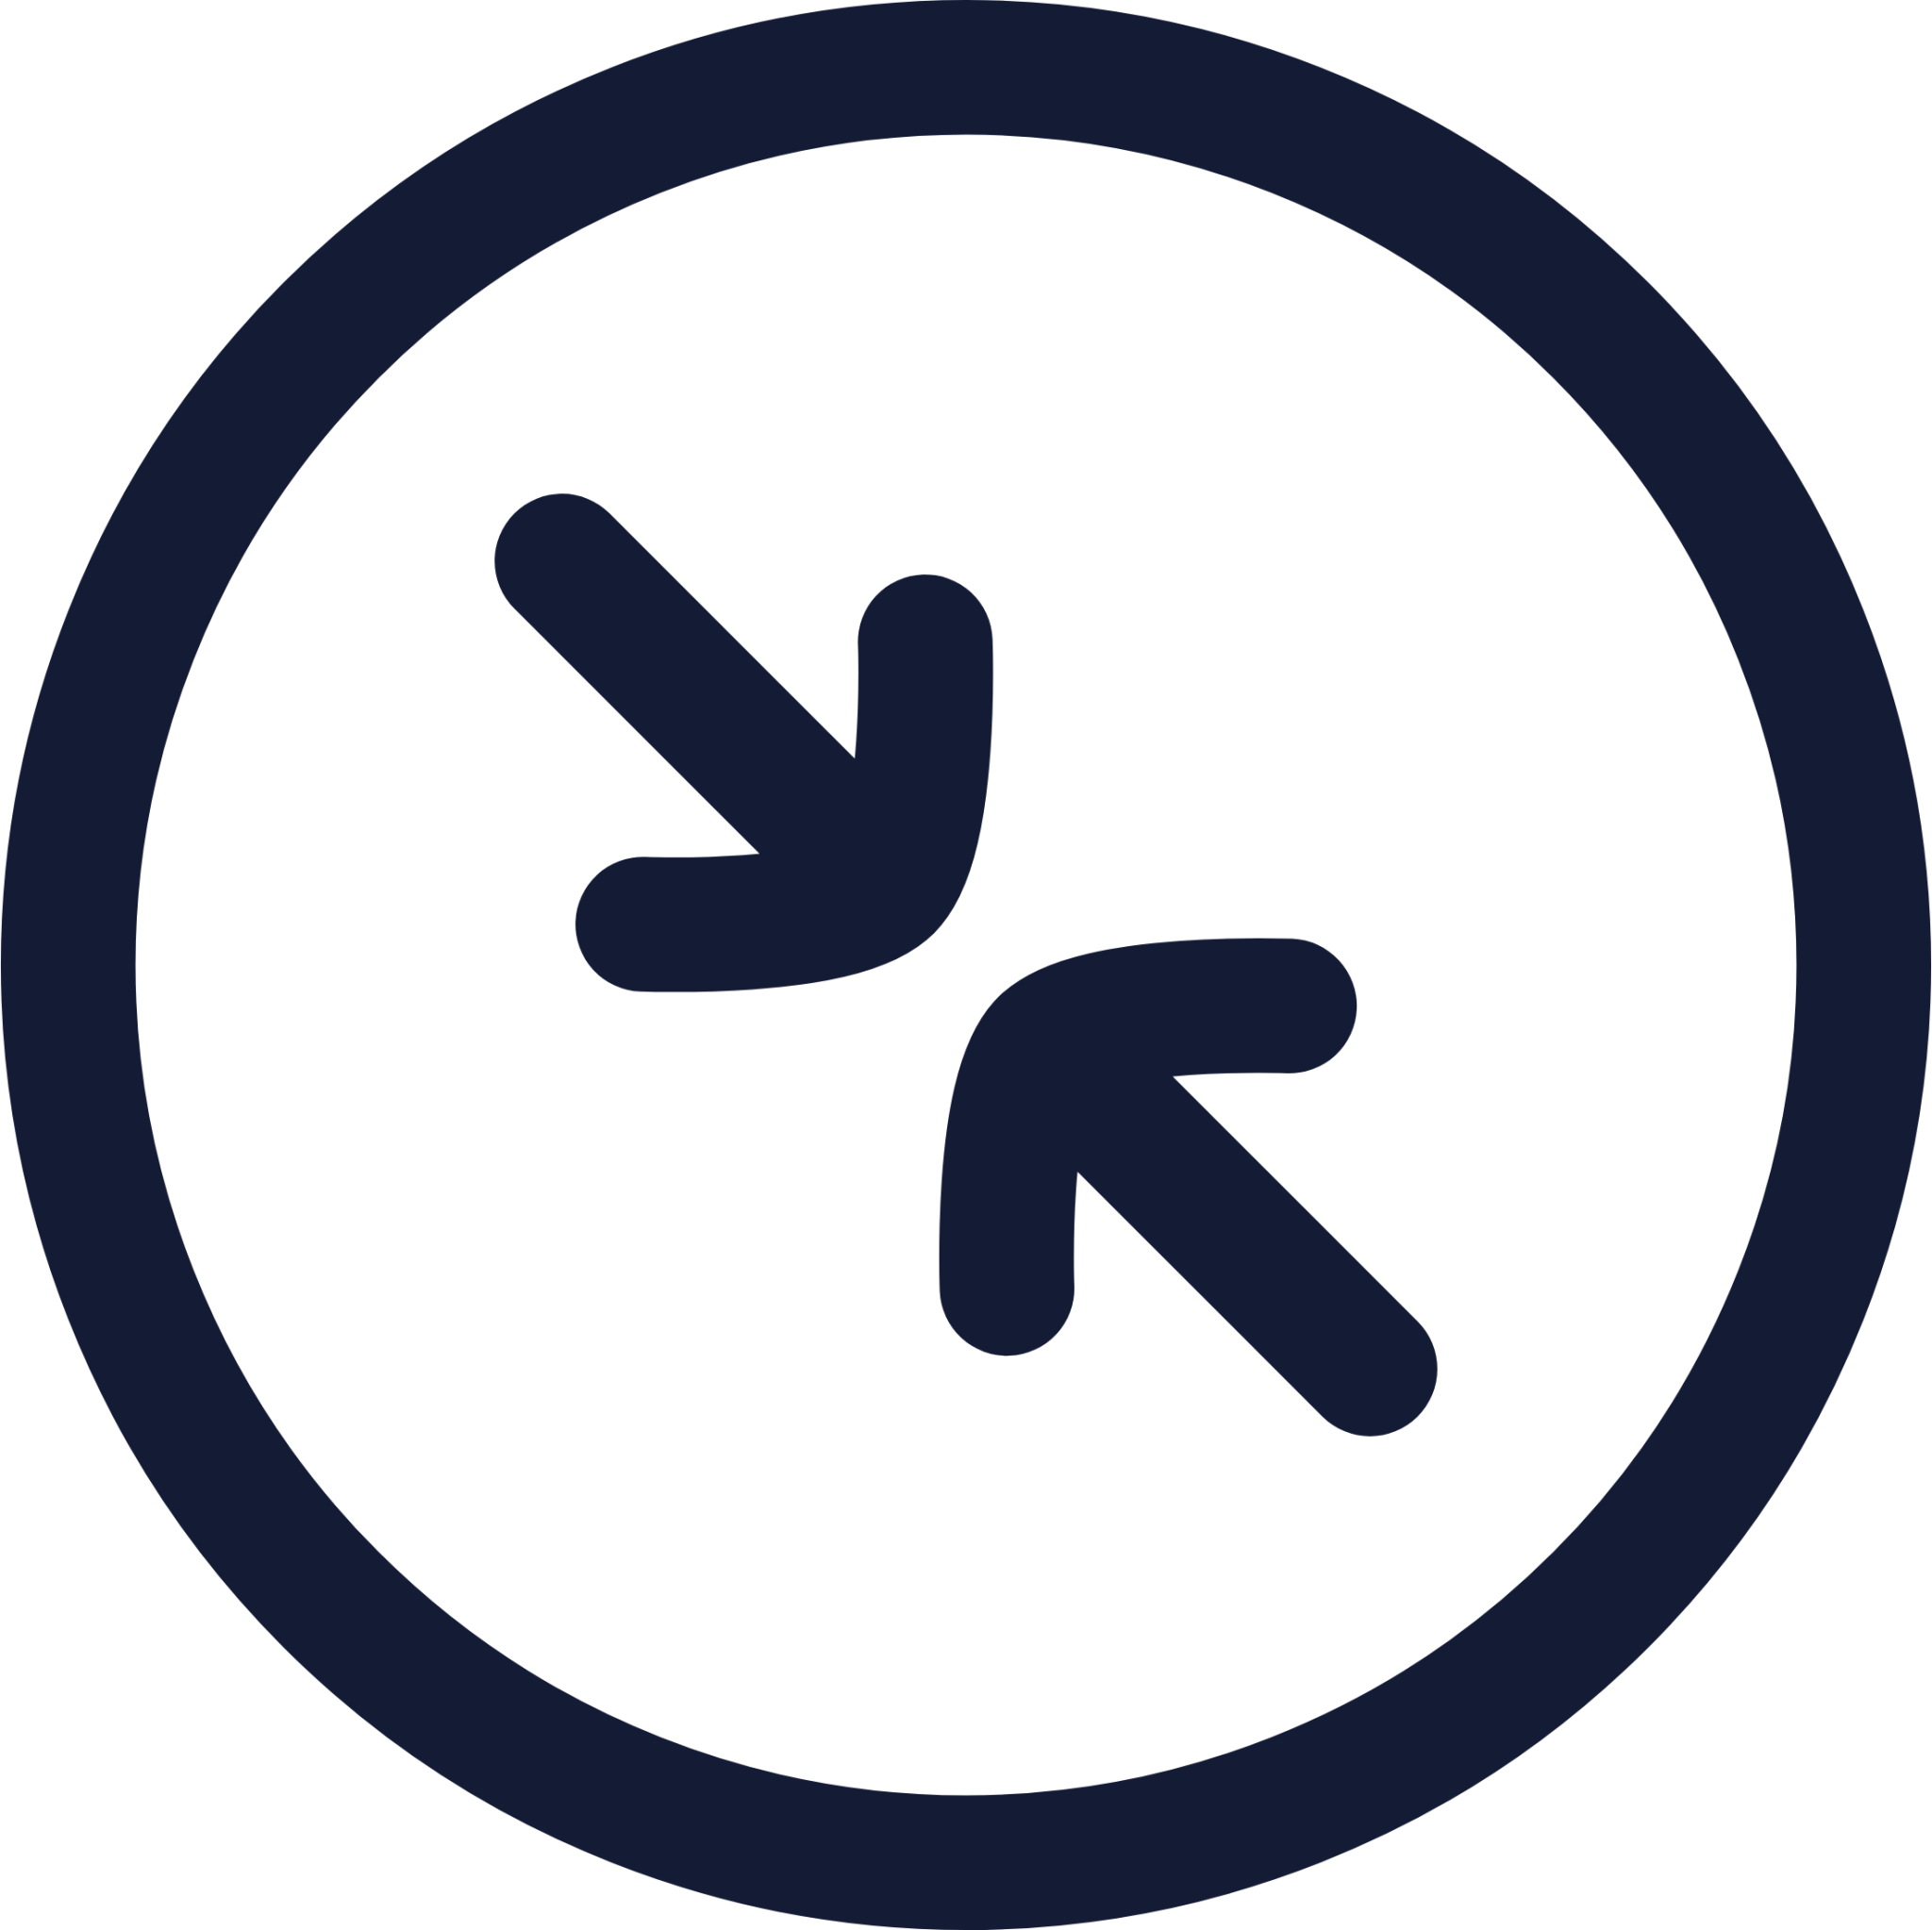 circle arrow shrink icon